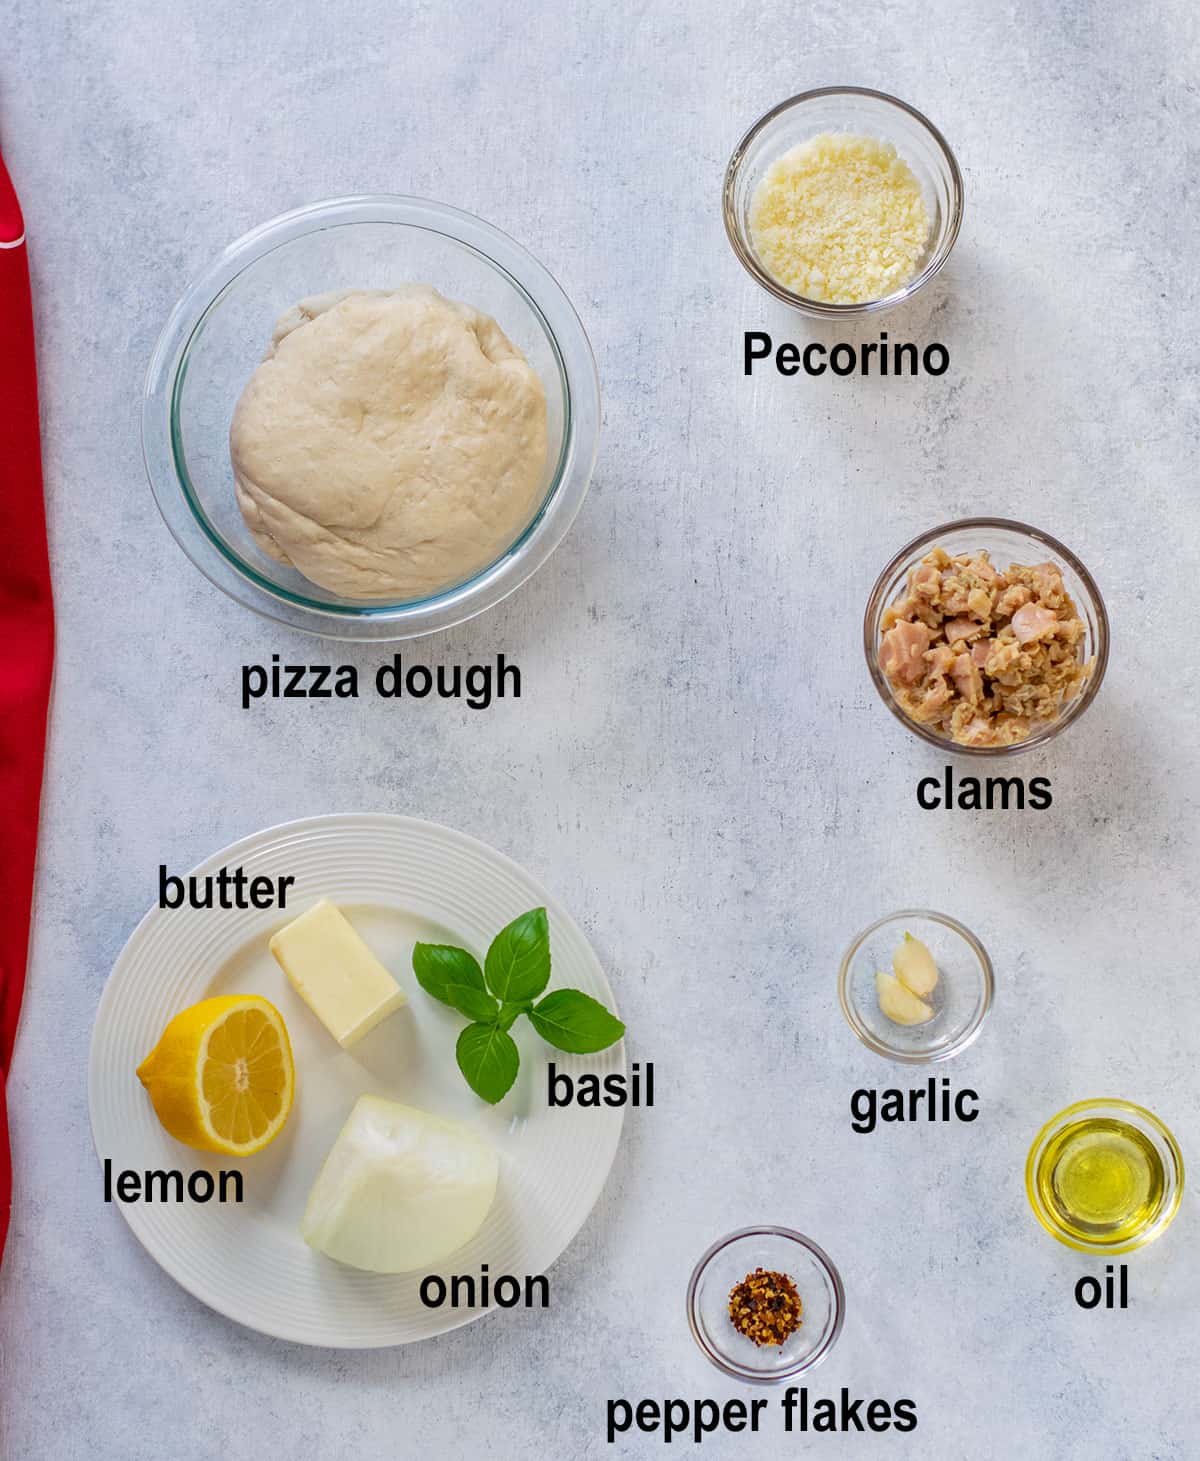 Pecorino, dough, clams, butter, basil, lemon, garlic, onion, pepper flakes, oil